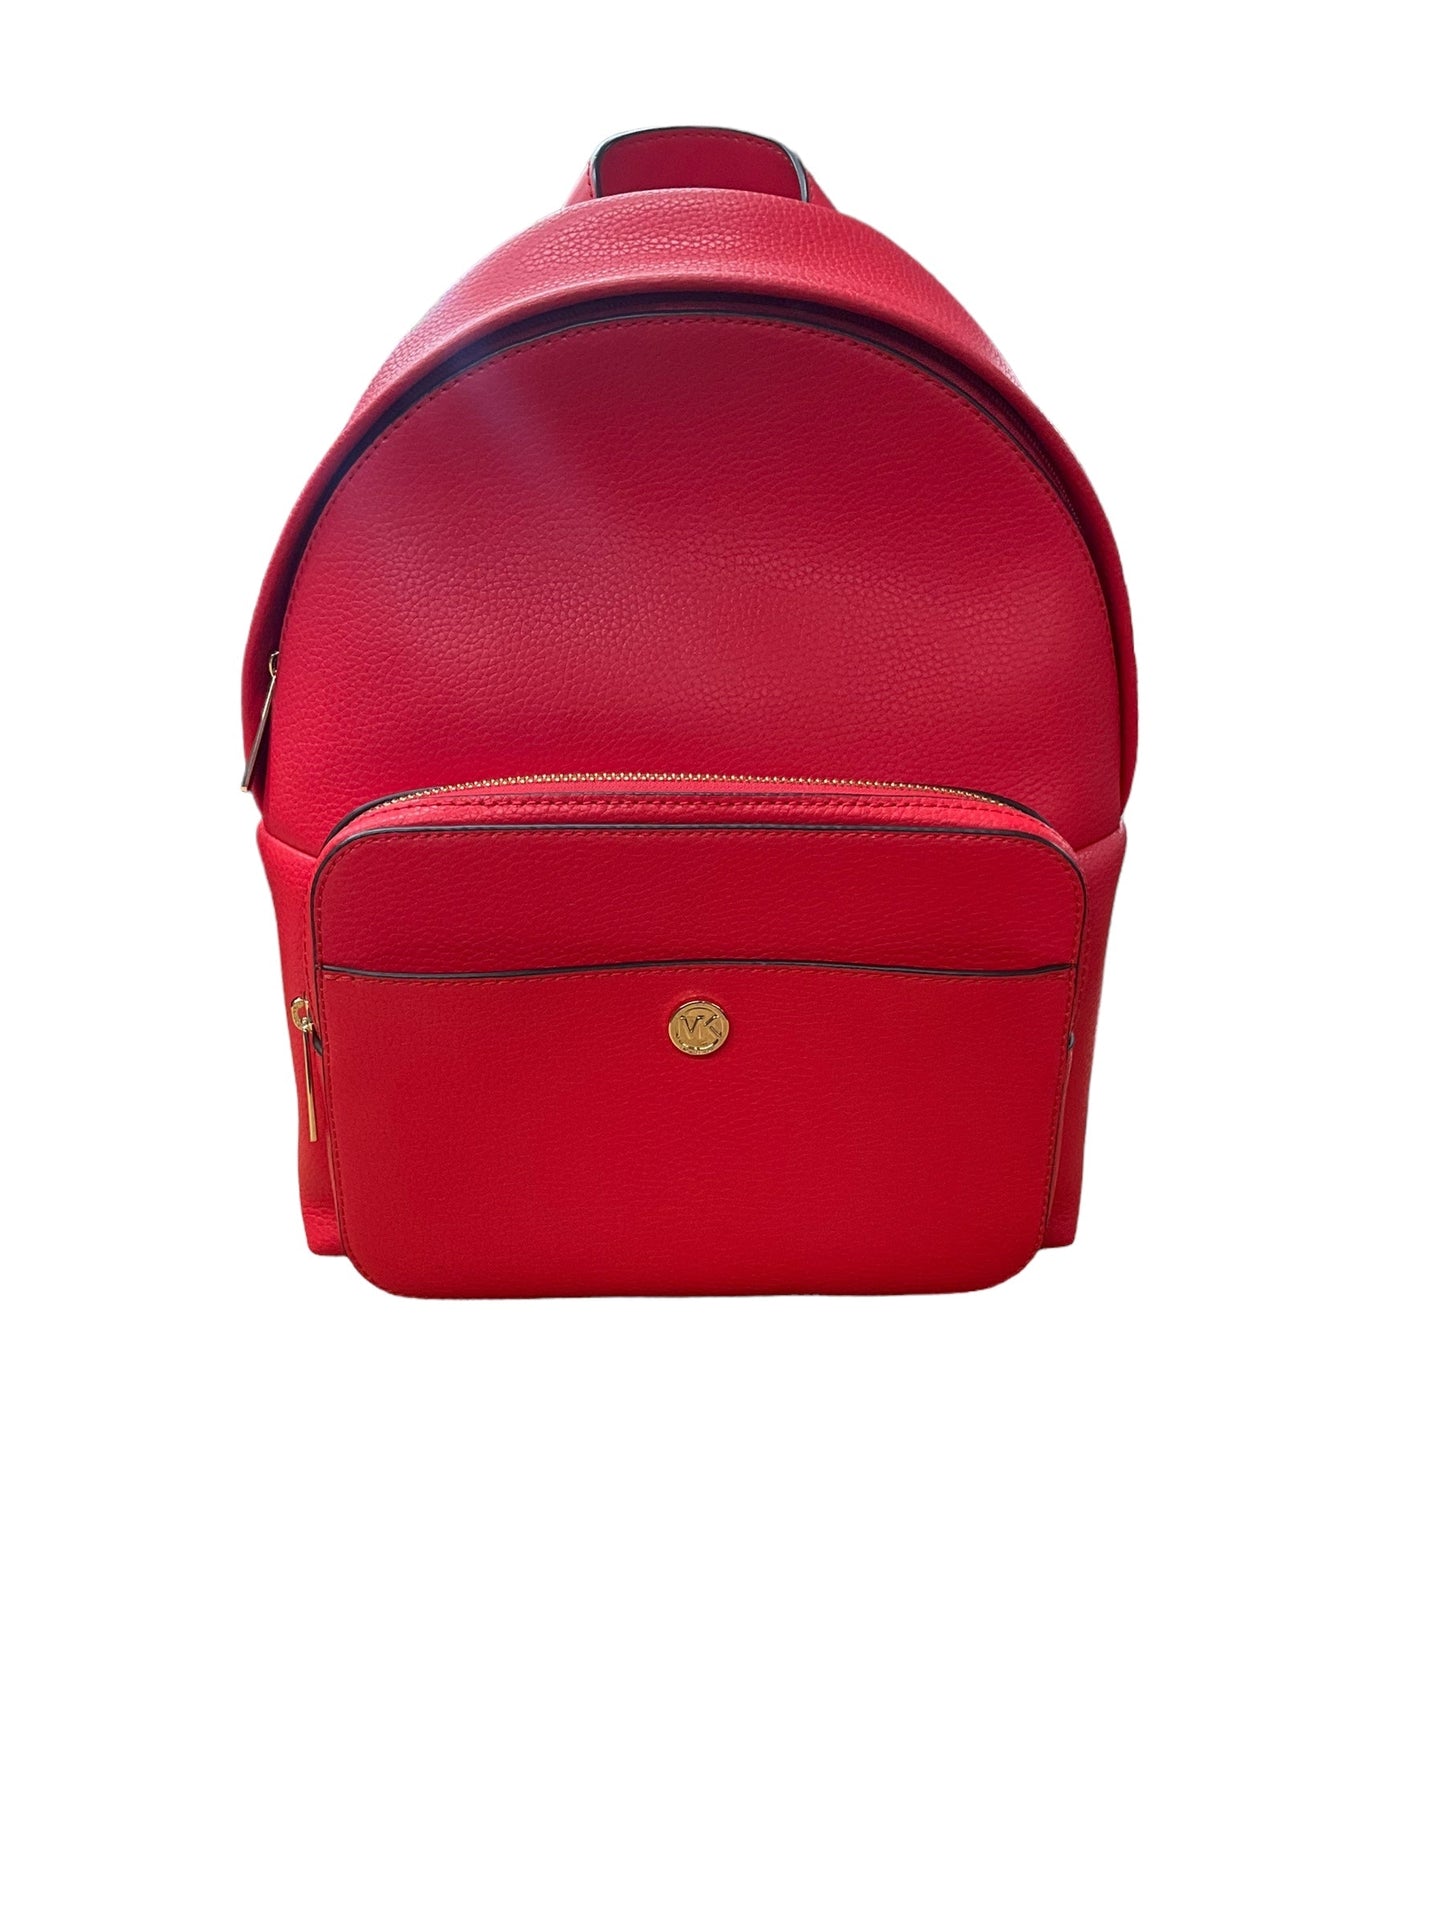 Backpack Leather Michael Kors, Size Medium